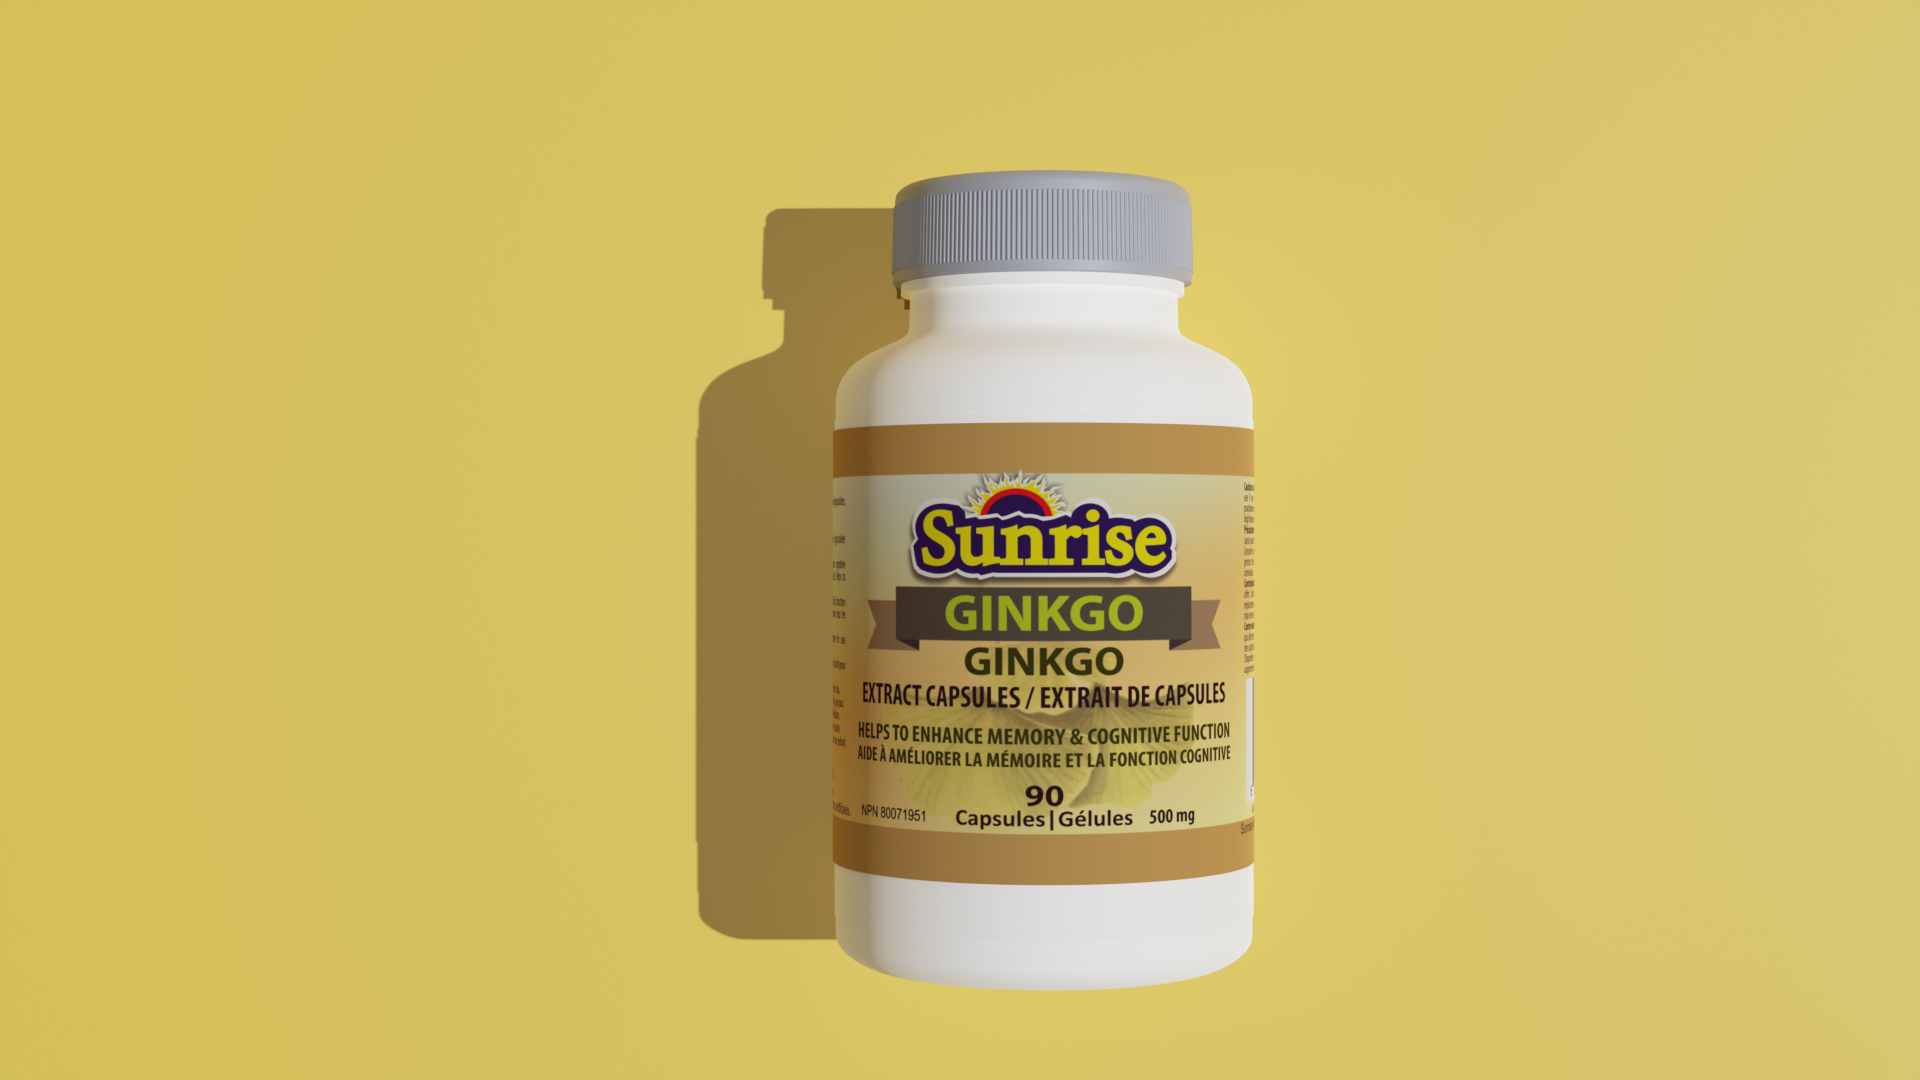 Sunrise Gingko – Capsules